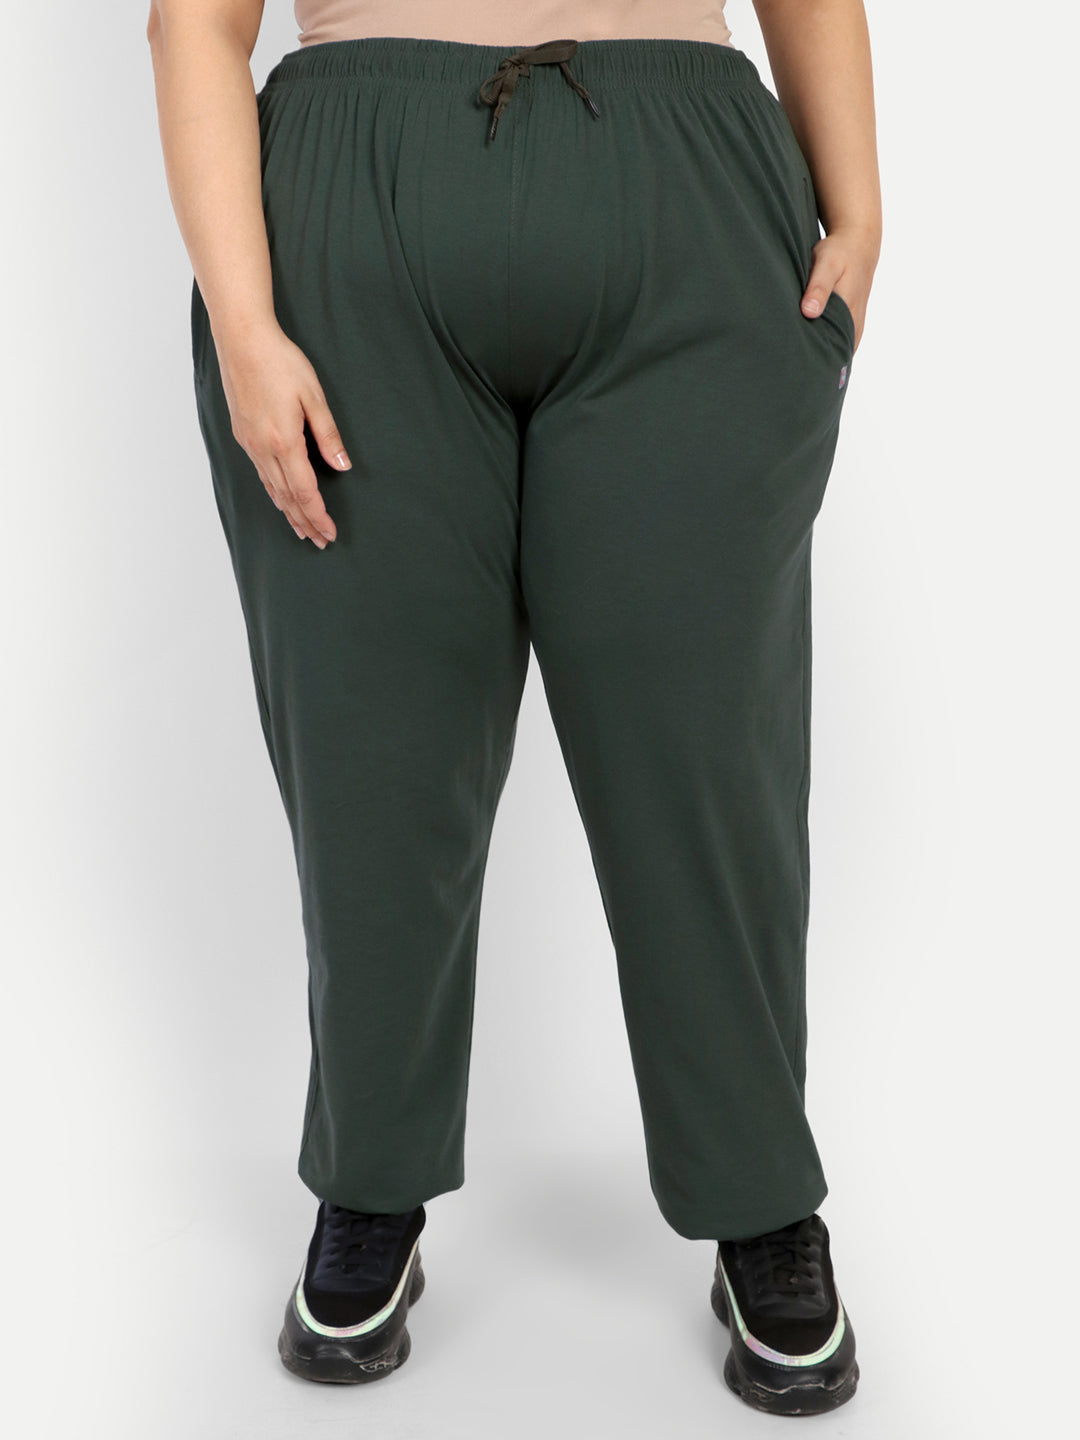 Solbiati Bottle Green Linen Pants : Made To Measure Custom Jeans For Men &  Women, MakeYourOwnJeans®